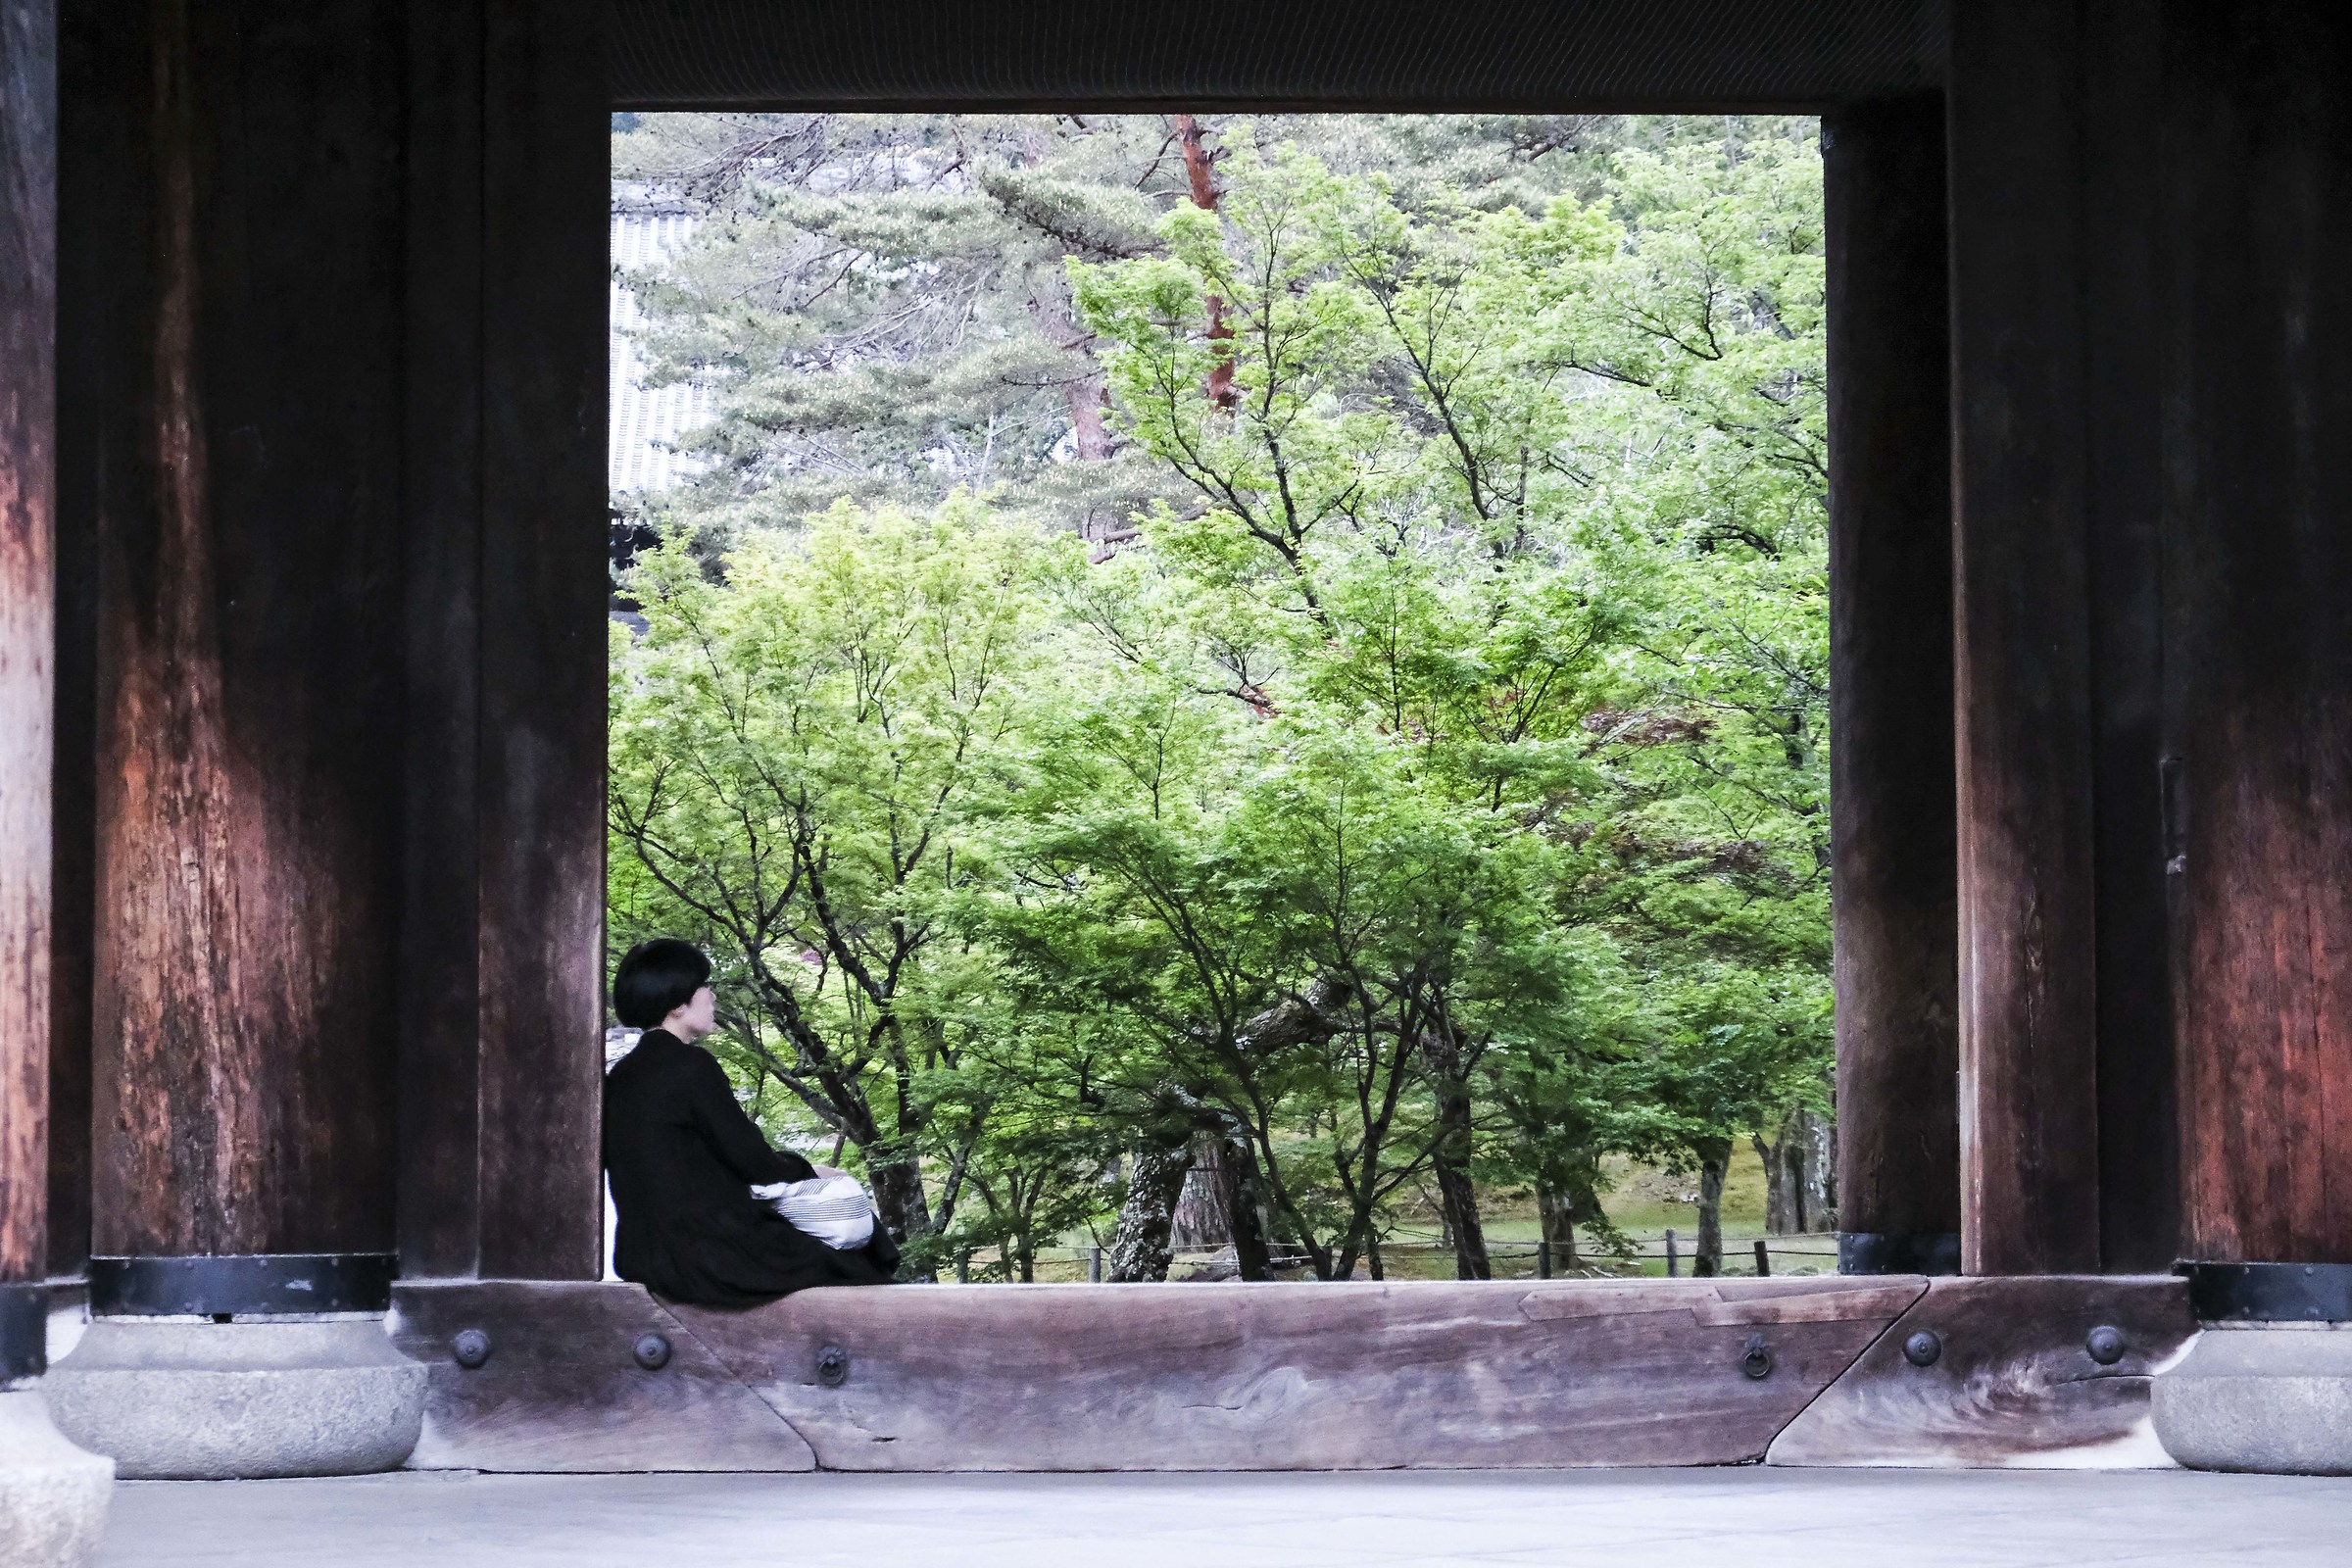 Kyoto - The spiritual heart of Japan...